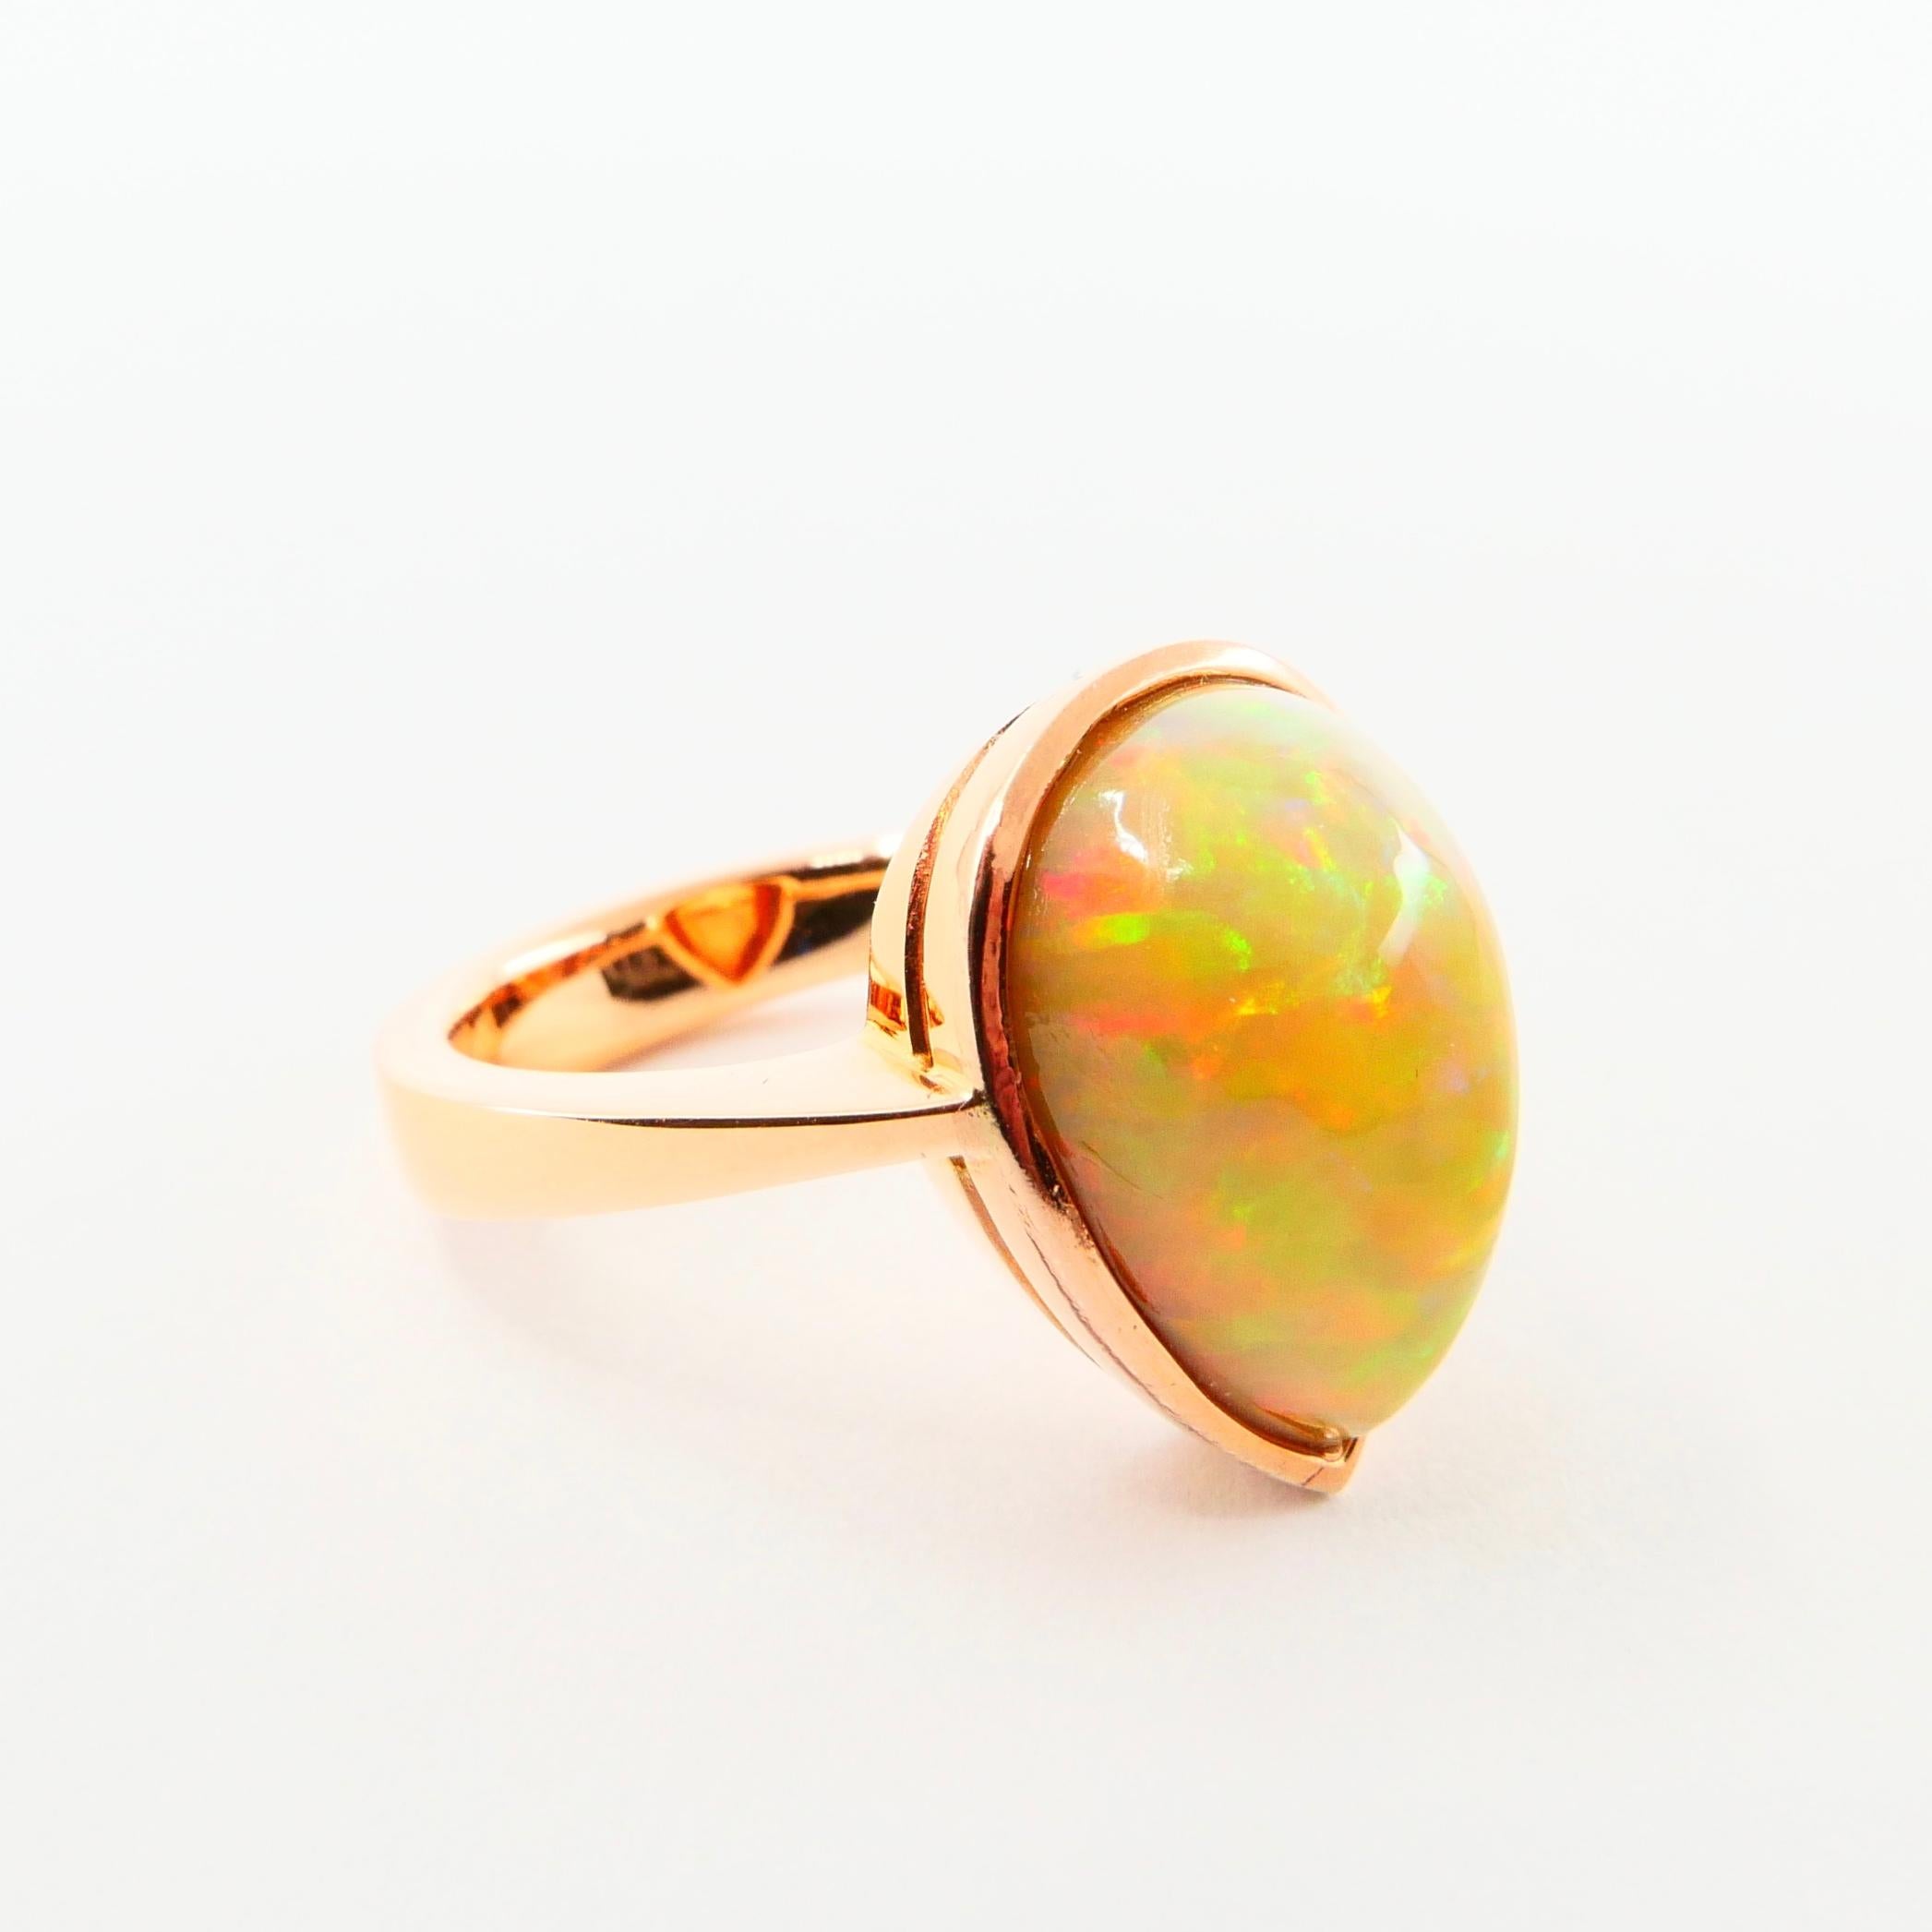 5.85 Carat Opal Ring Set in 18 Karat Gold Colorful Red, Green, Orange and Yellow 5